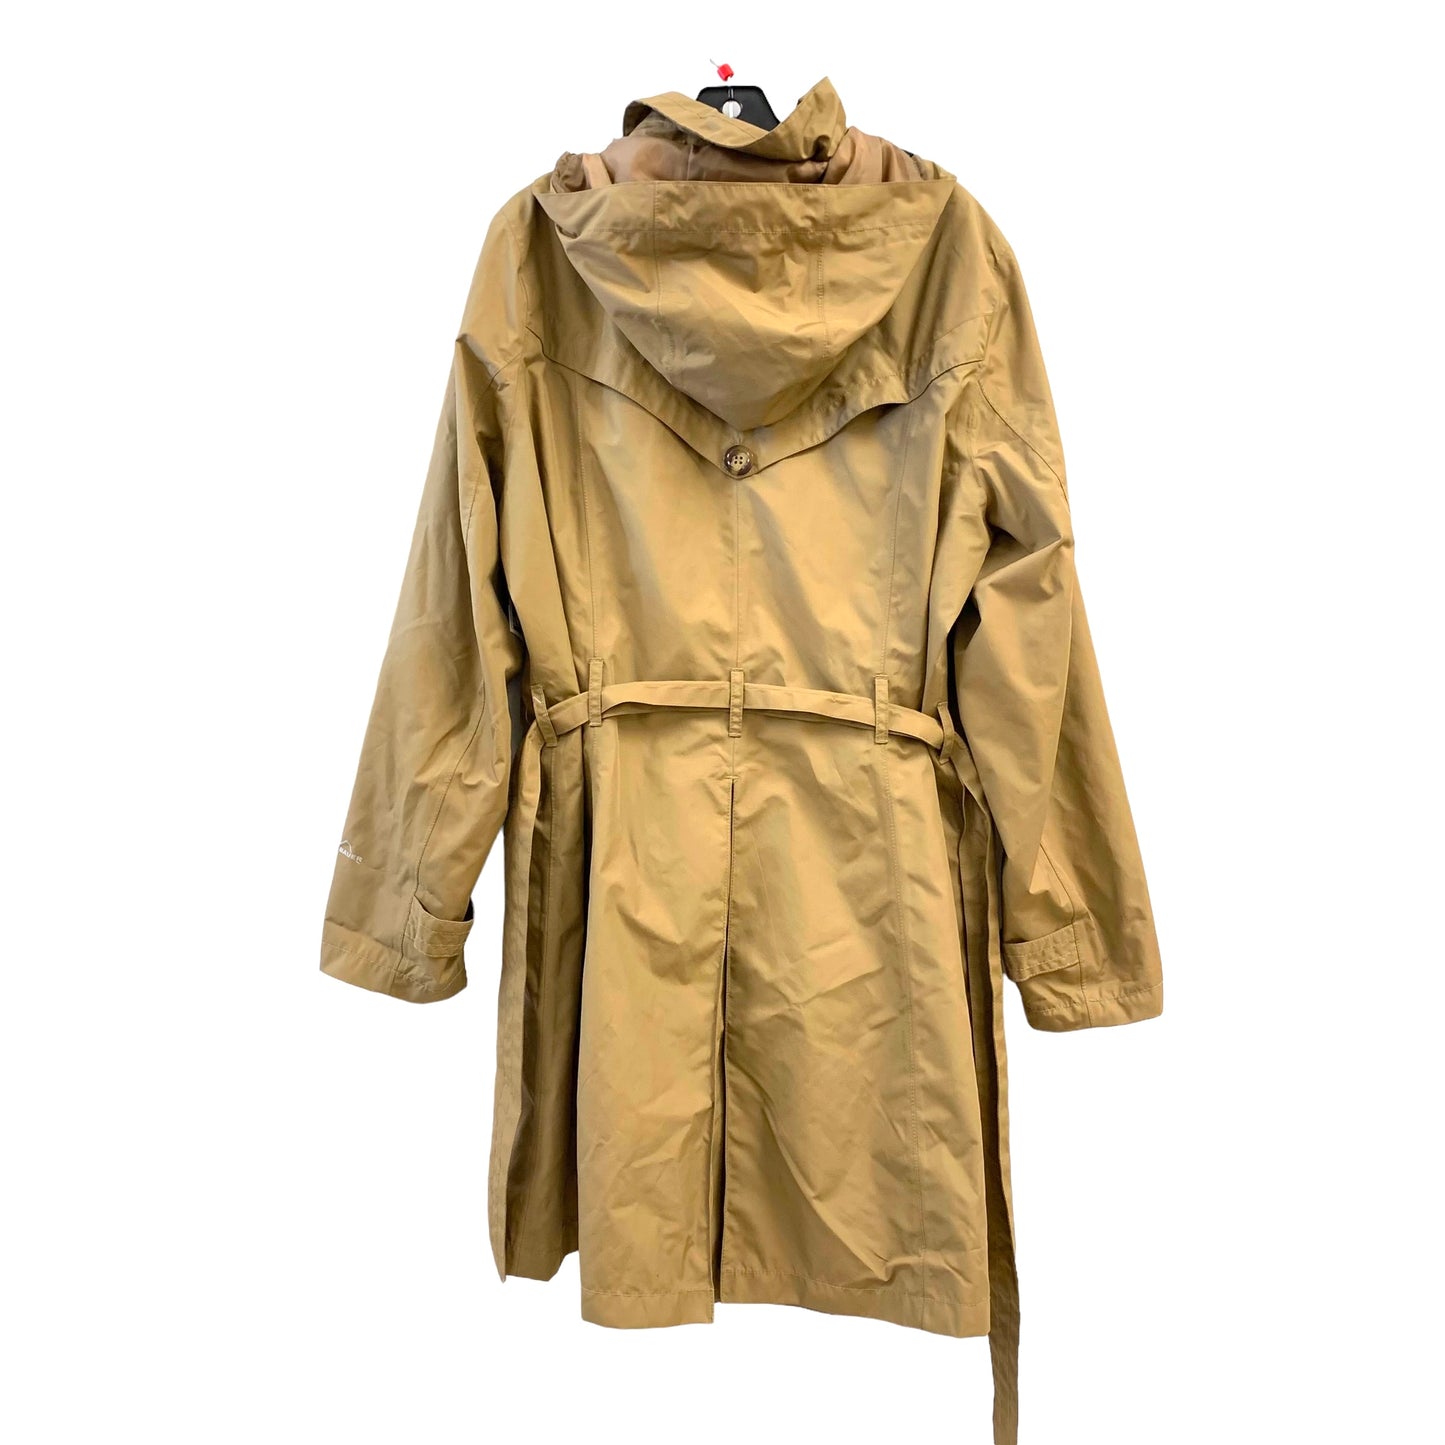 Coat Trench Coat By Eddie Bauer  Size: Xxl